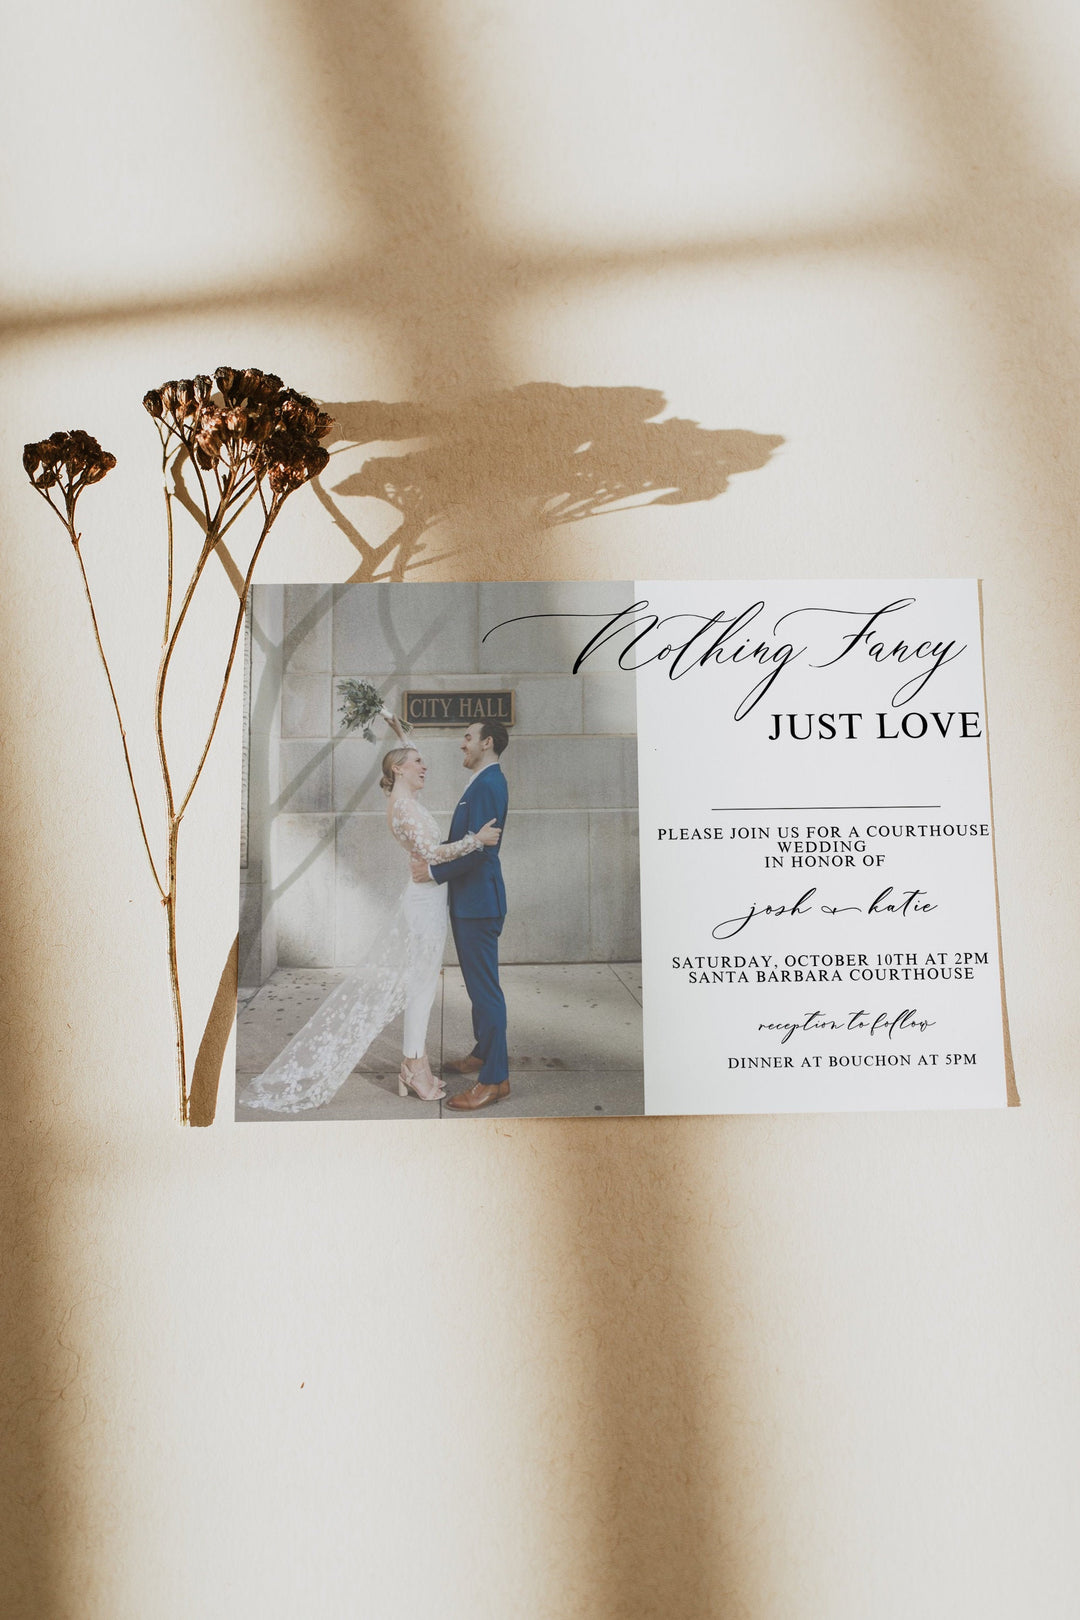 City Hall Wedding Invitation Postcard - Courthouse Wedding Invitation - Nothing Fancy Just Love Invitation - Backyard Wedding Invitation -